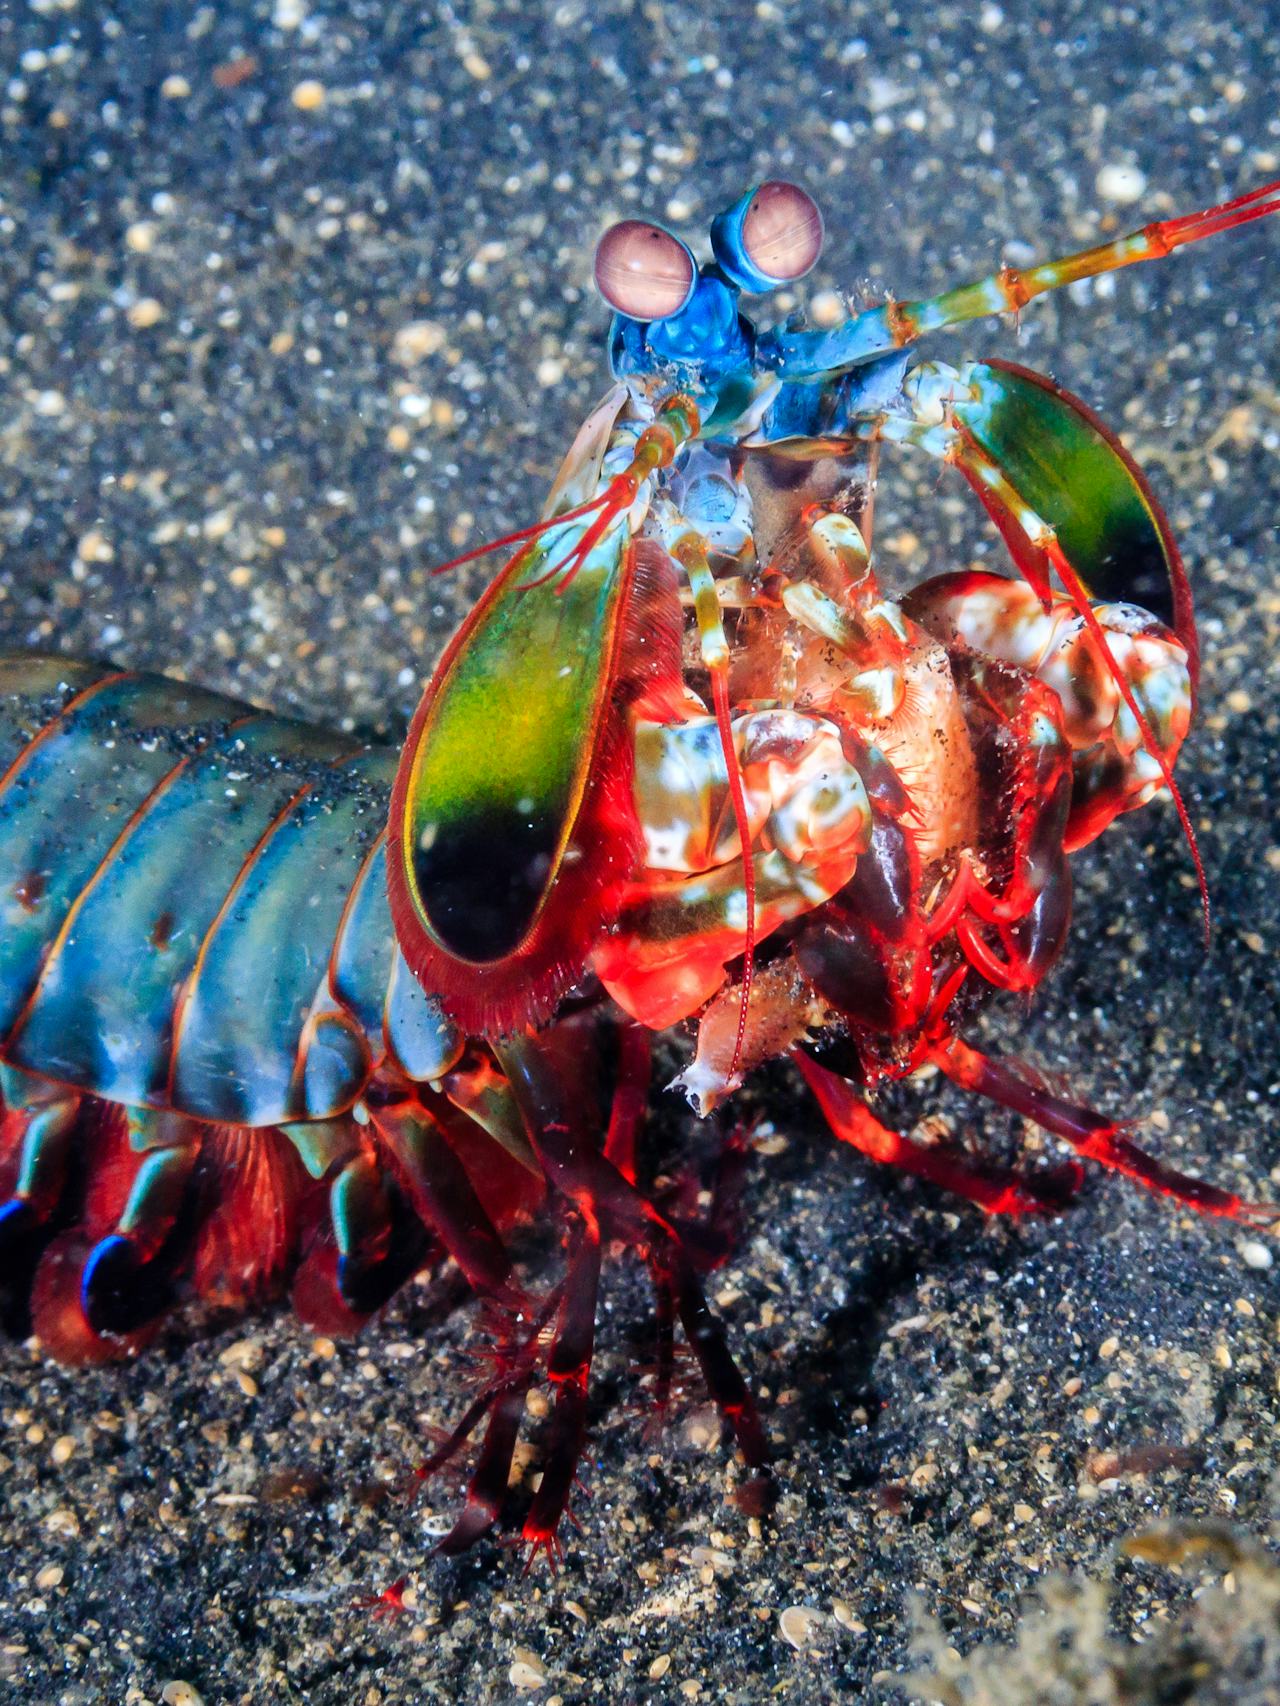 Mantis shrimp punch